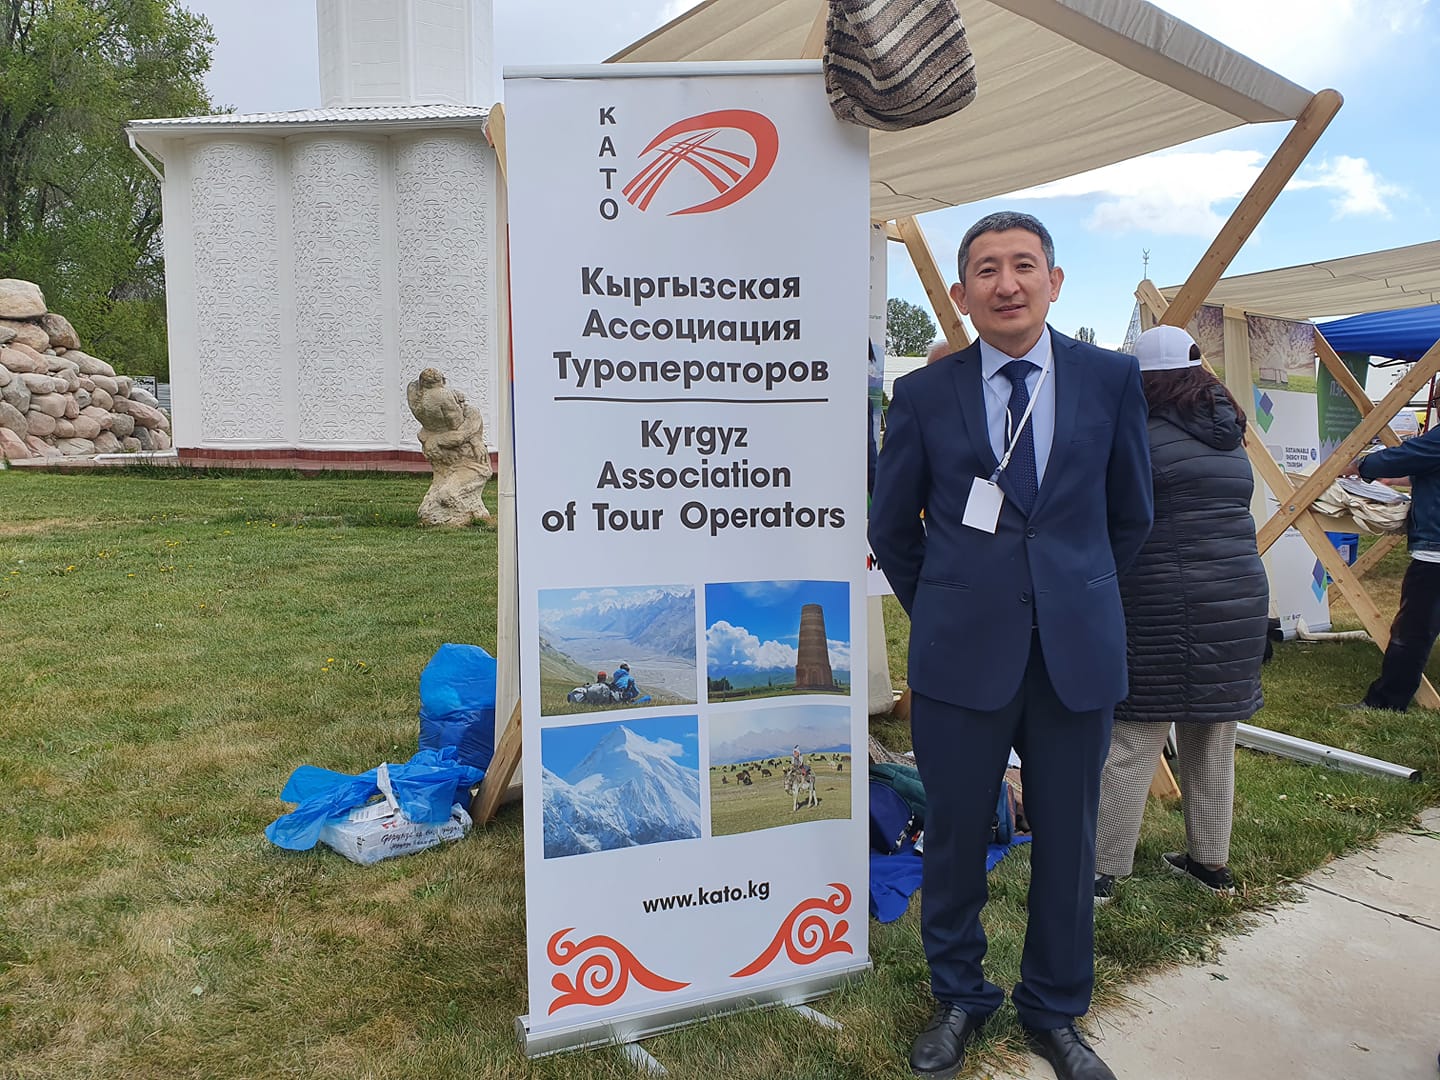 Kyrgyz Association of Tour Operators